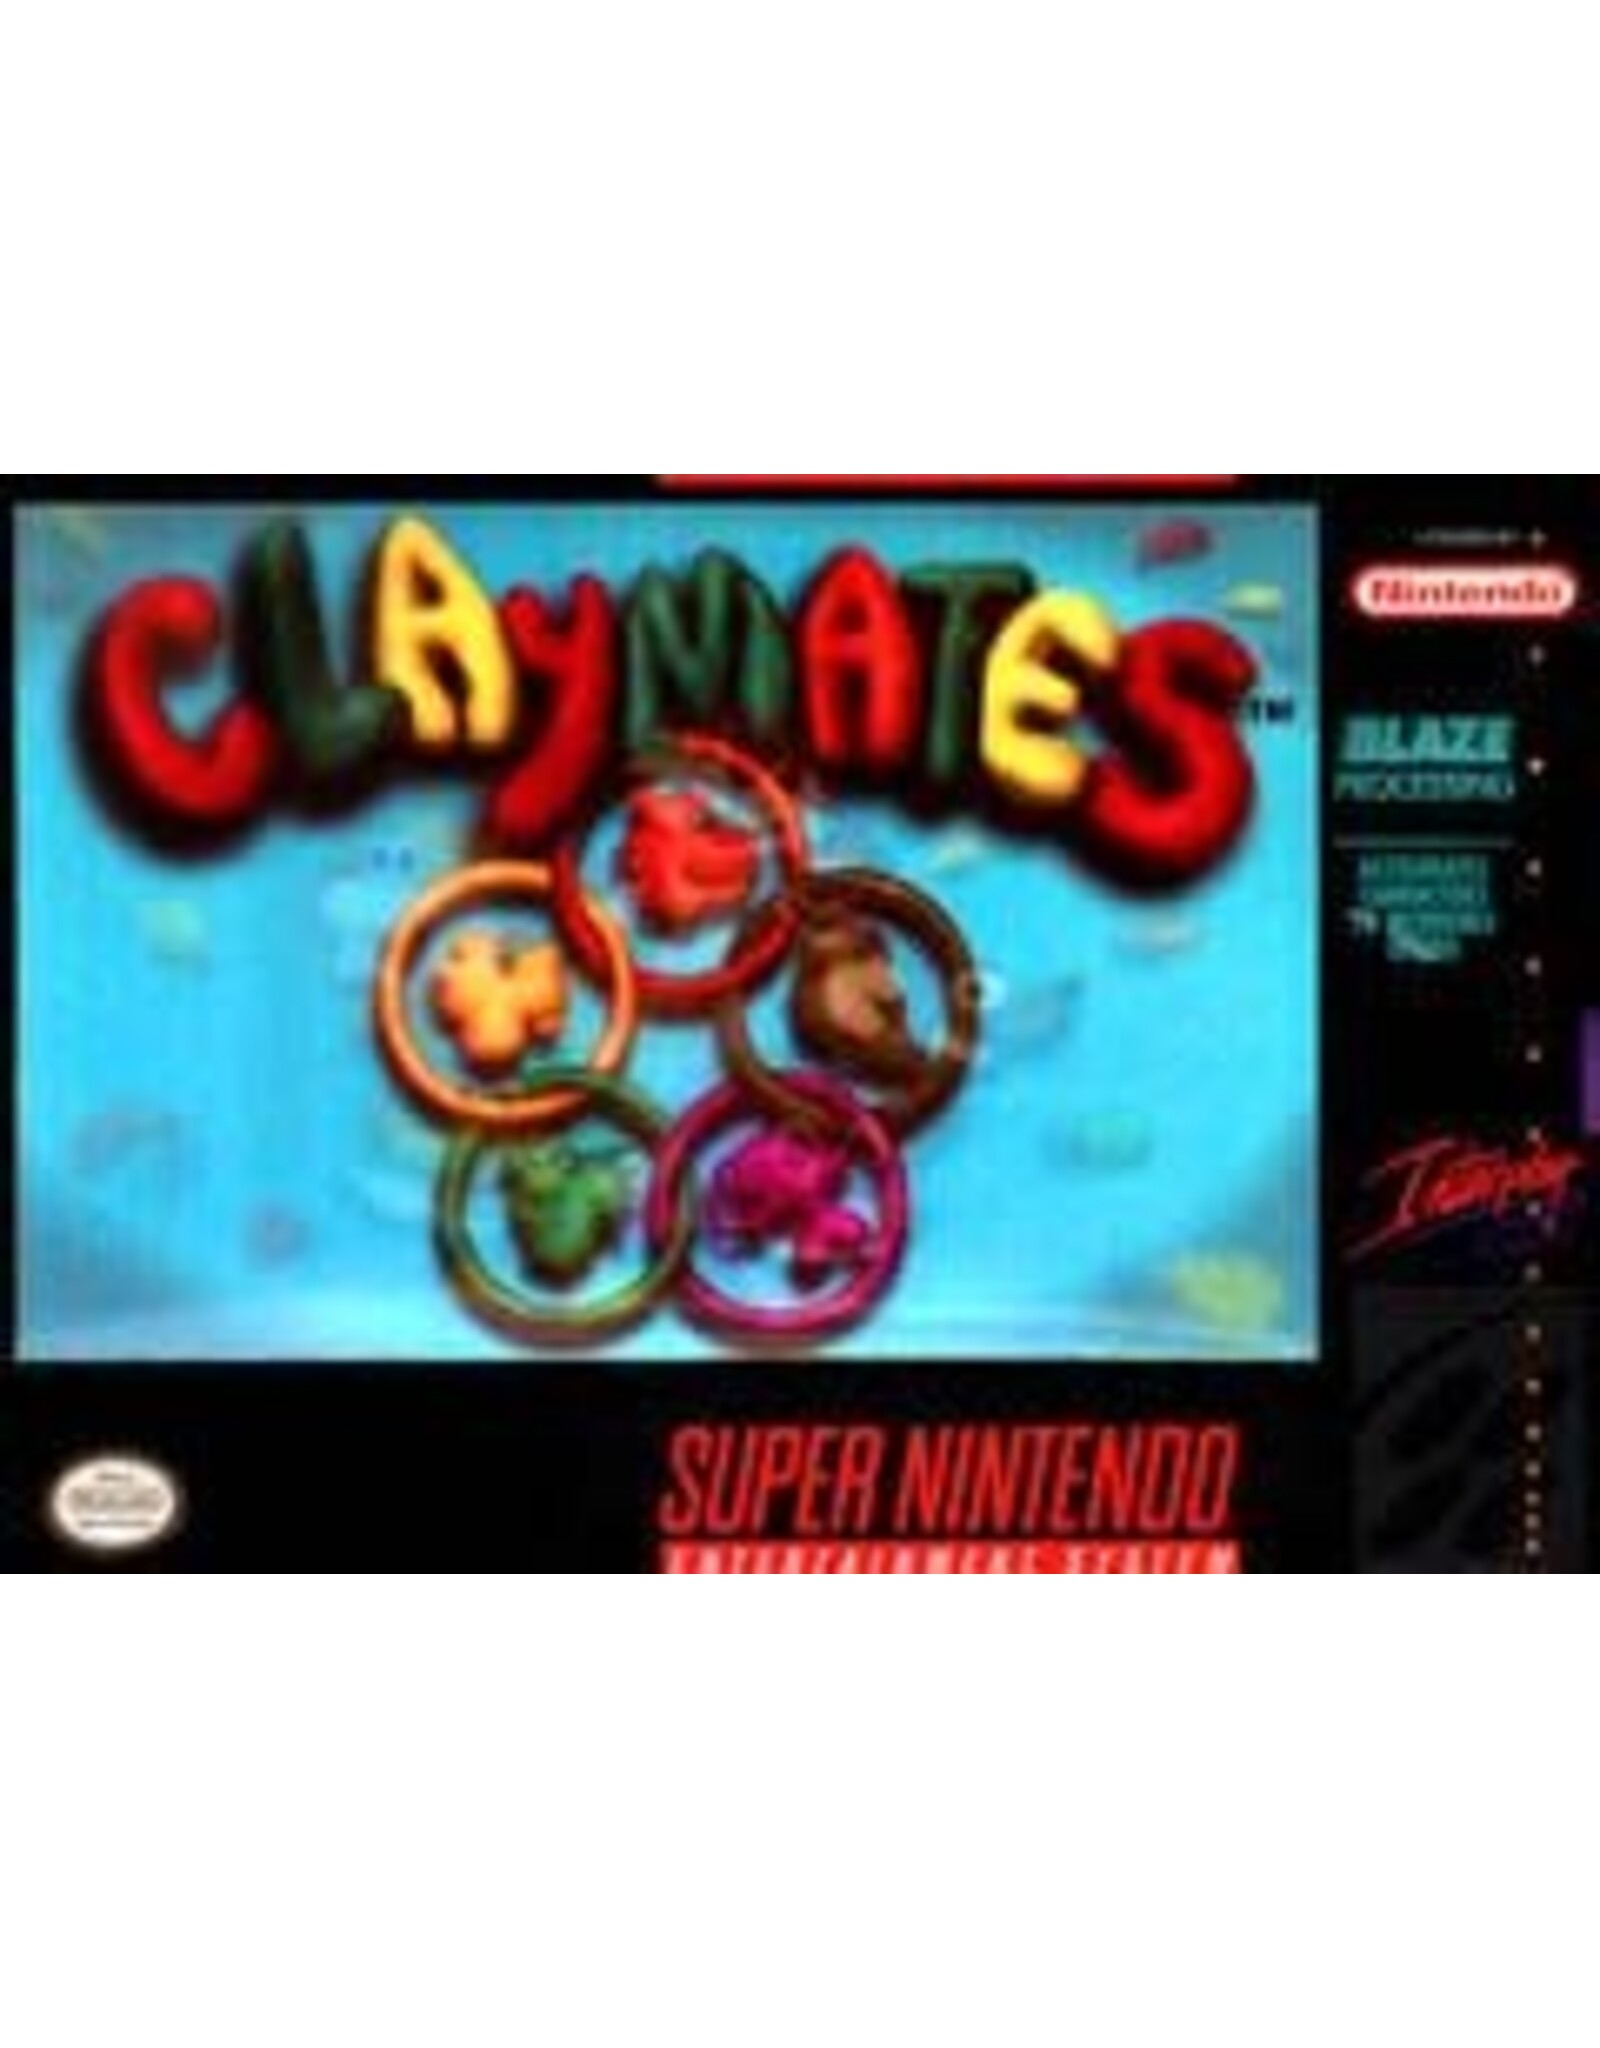 Super Nintendo Claymates (Cart Only, Damaged Cart)